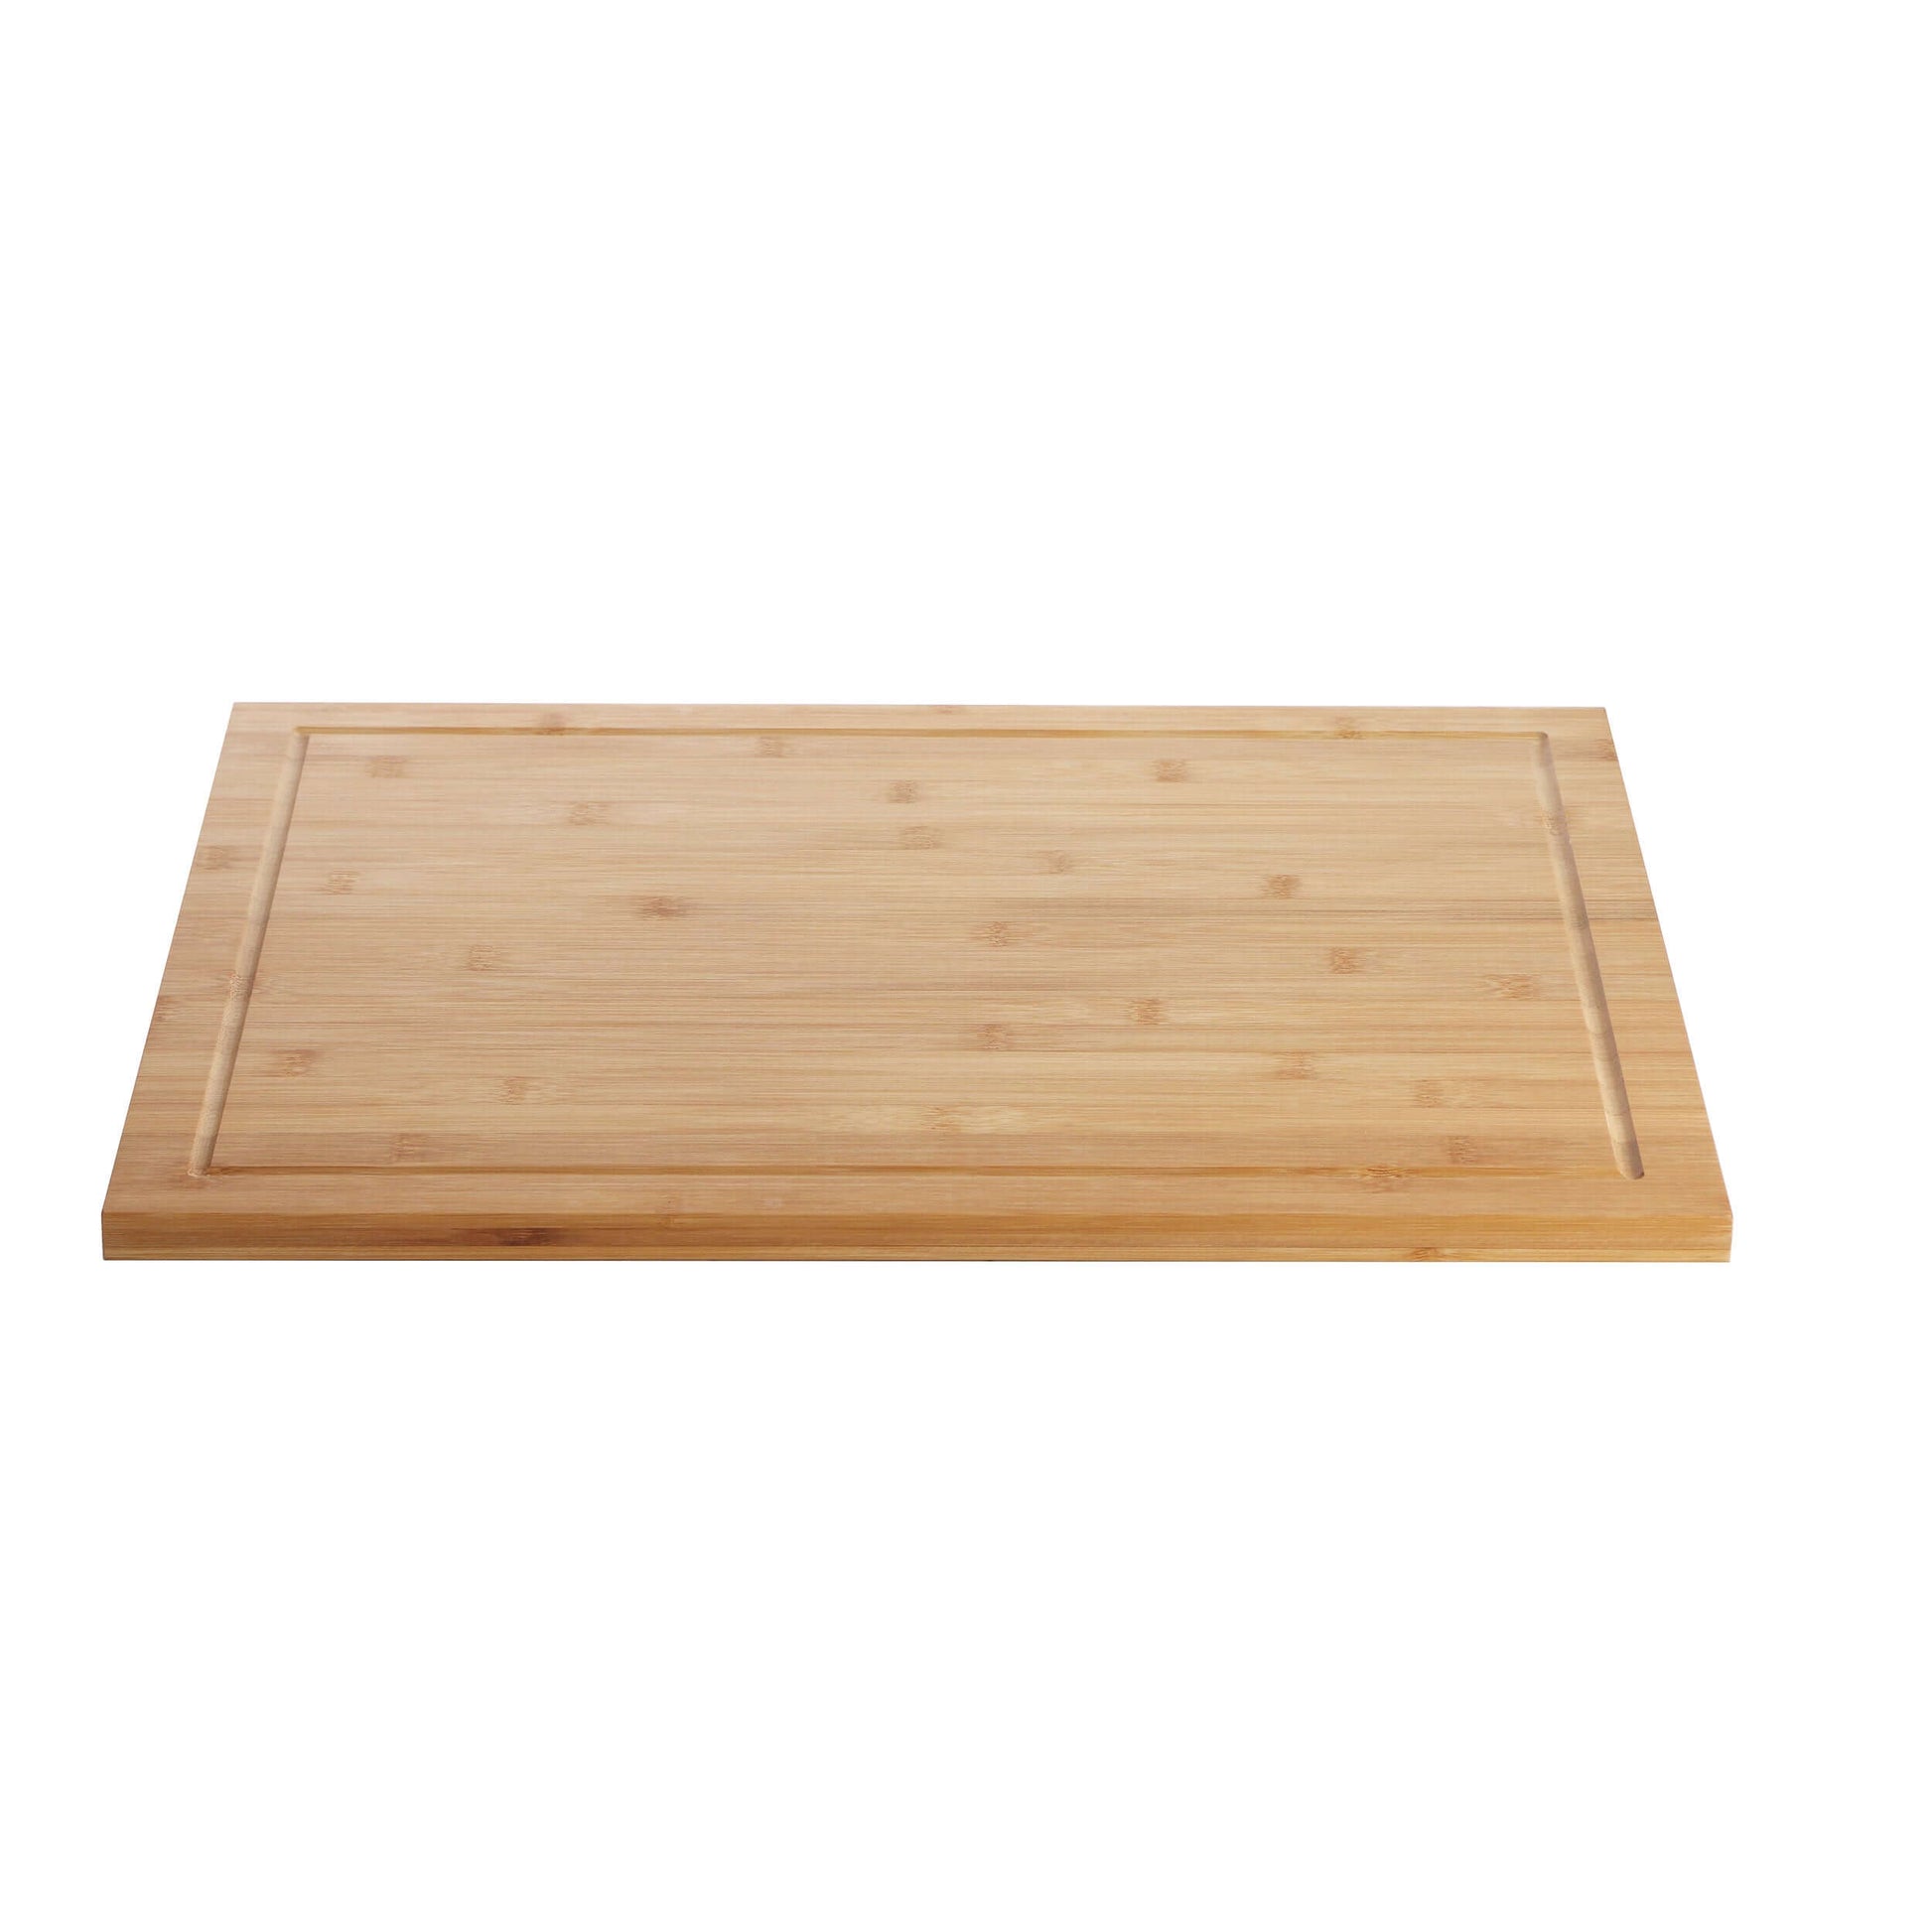 Tabla de corte de madera 48x38cm - Green